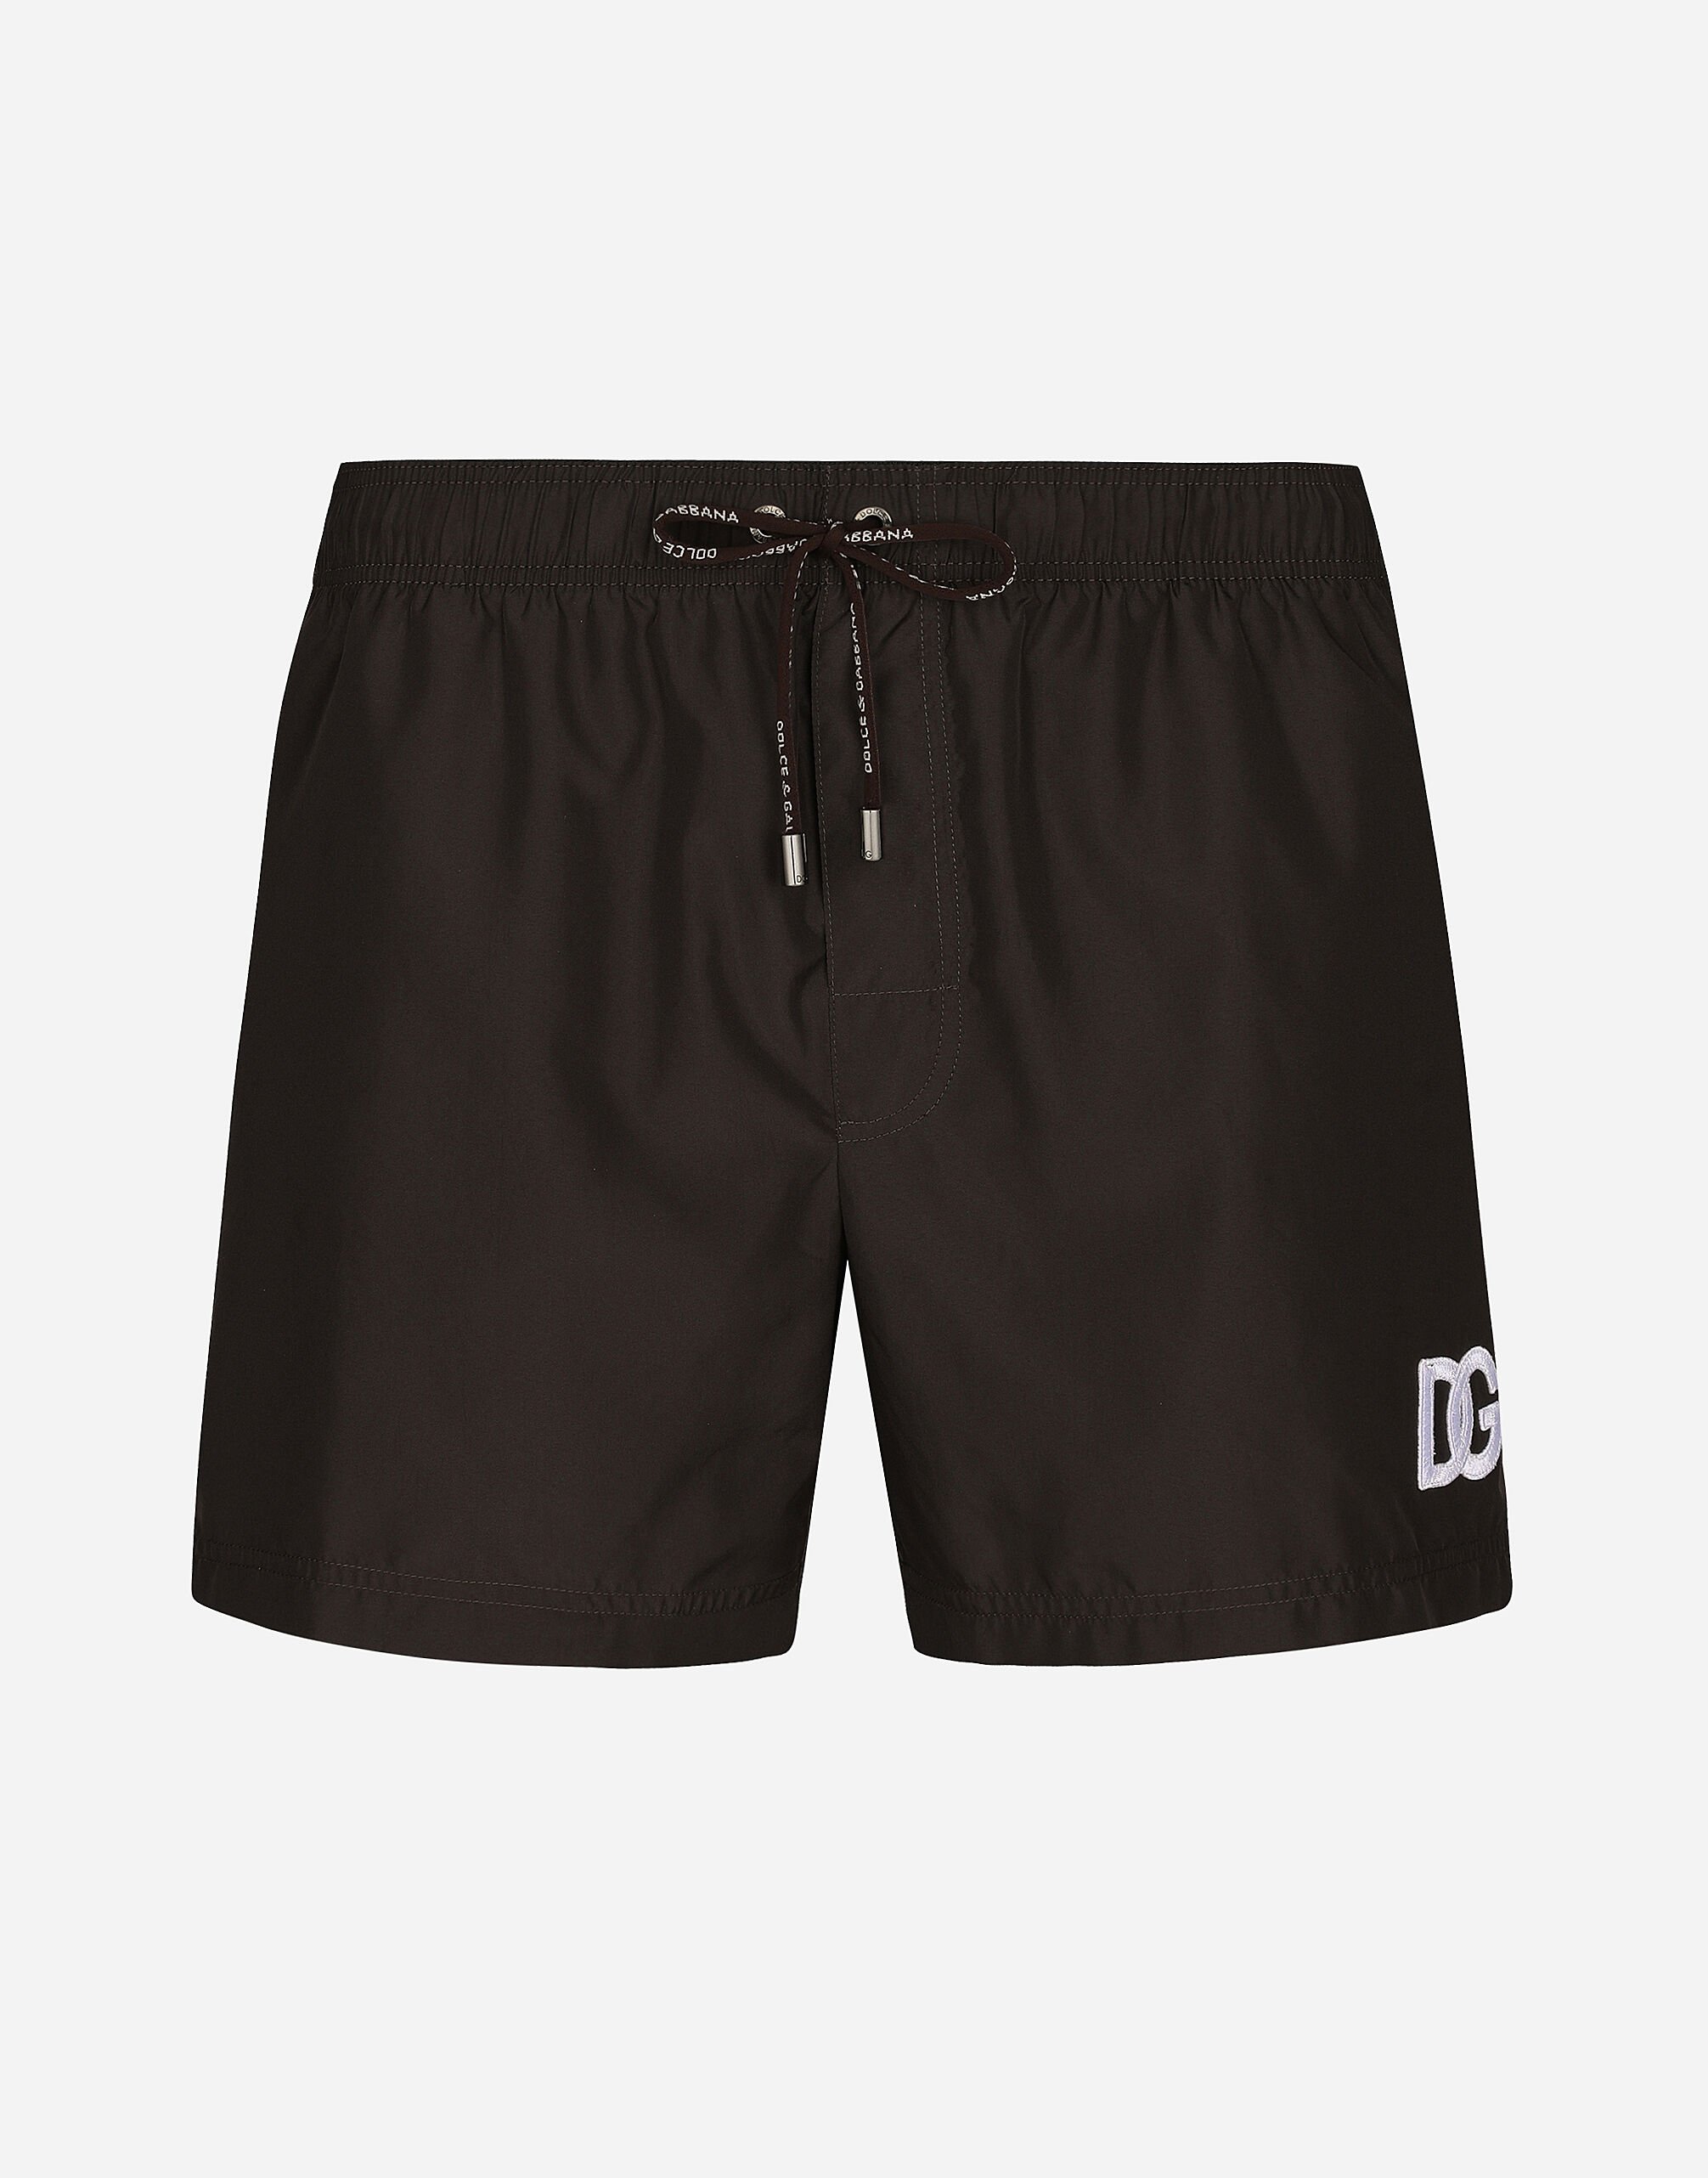 Dolce & Gabbana Short swim trunks with DG logo patch Print M4E68TISMF5